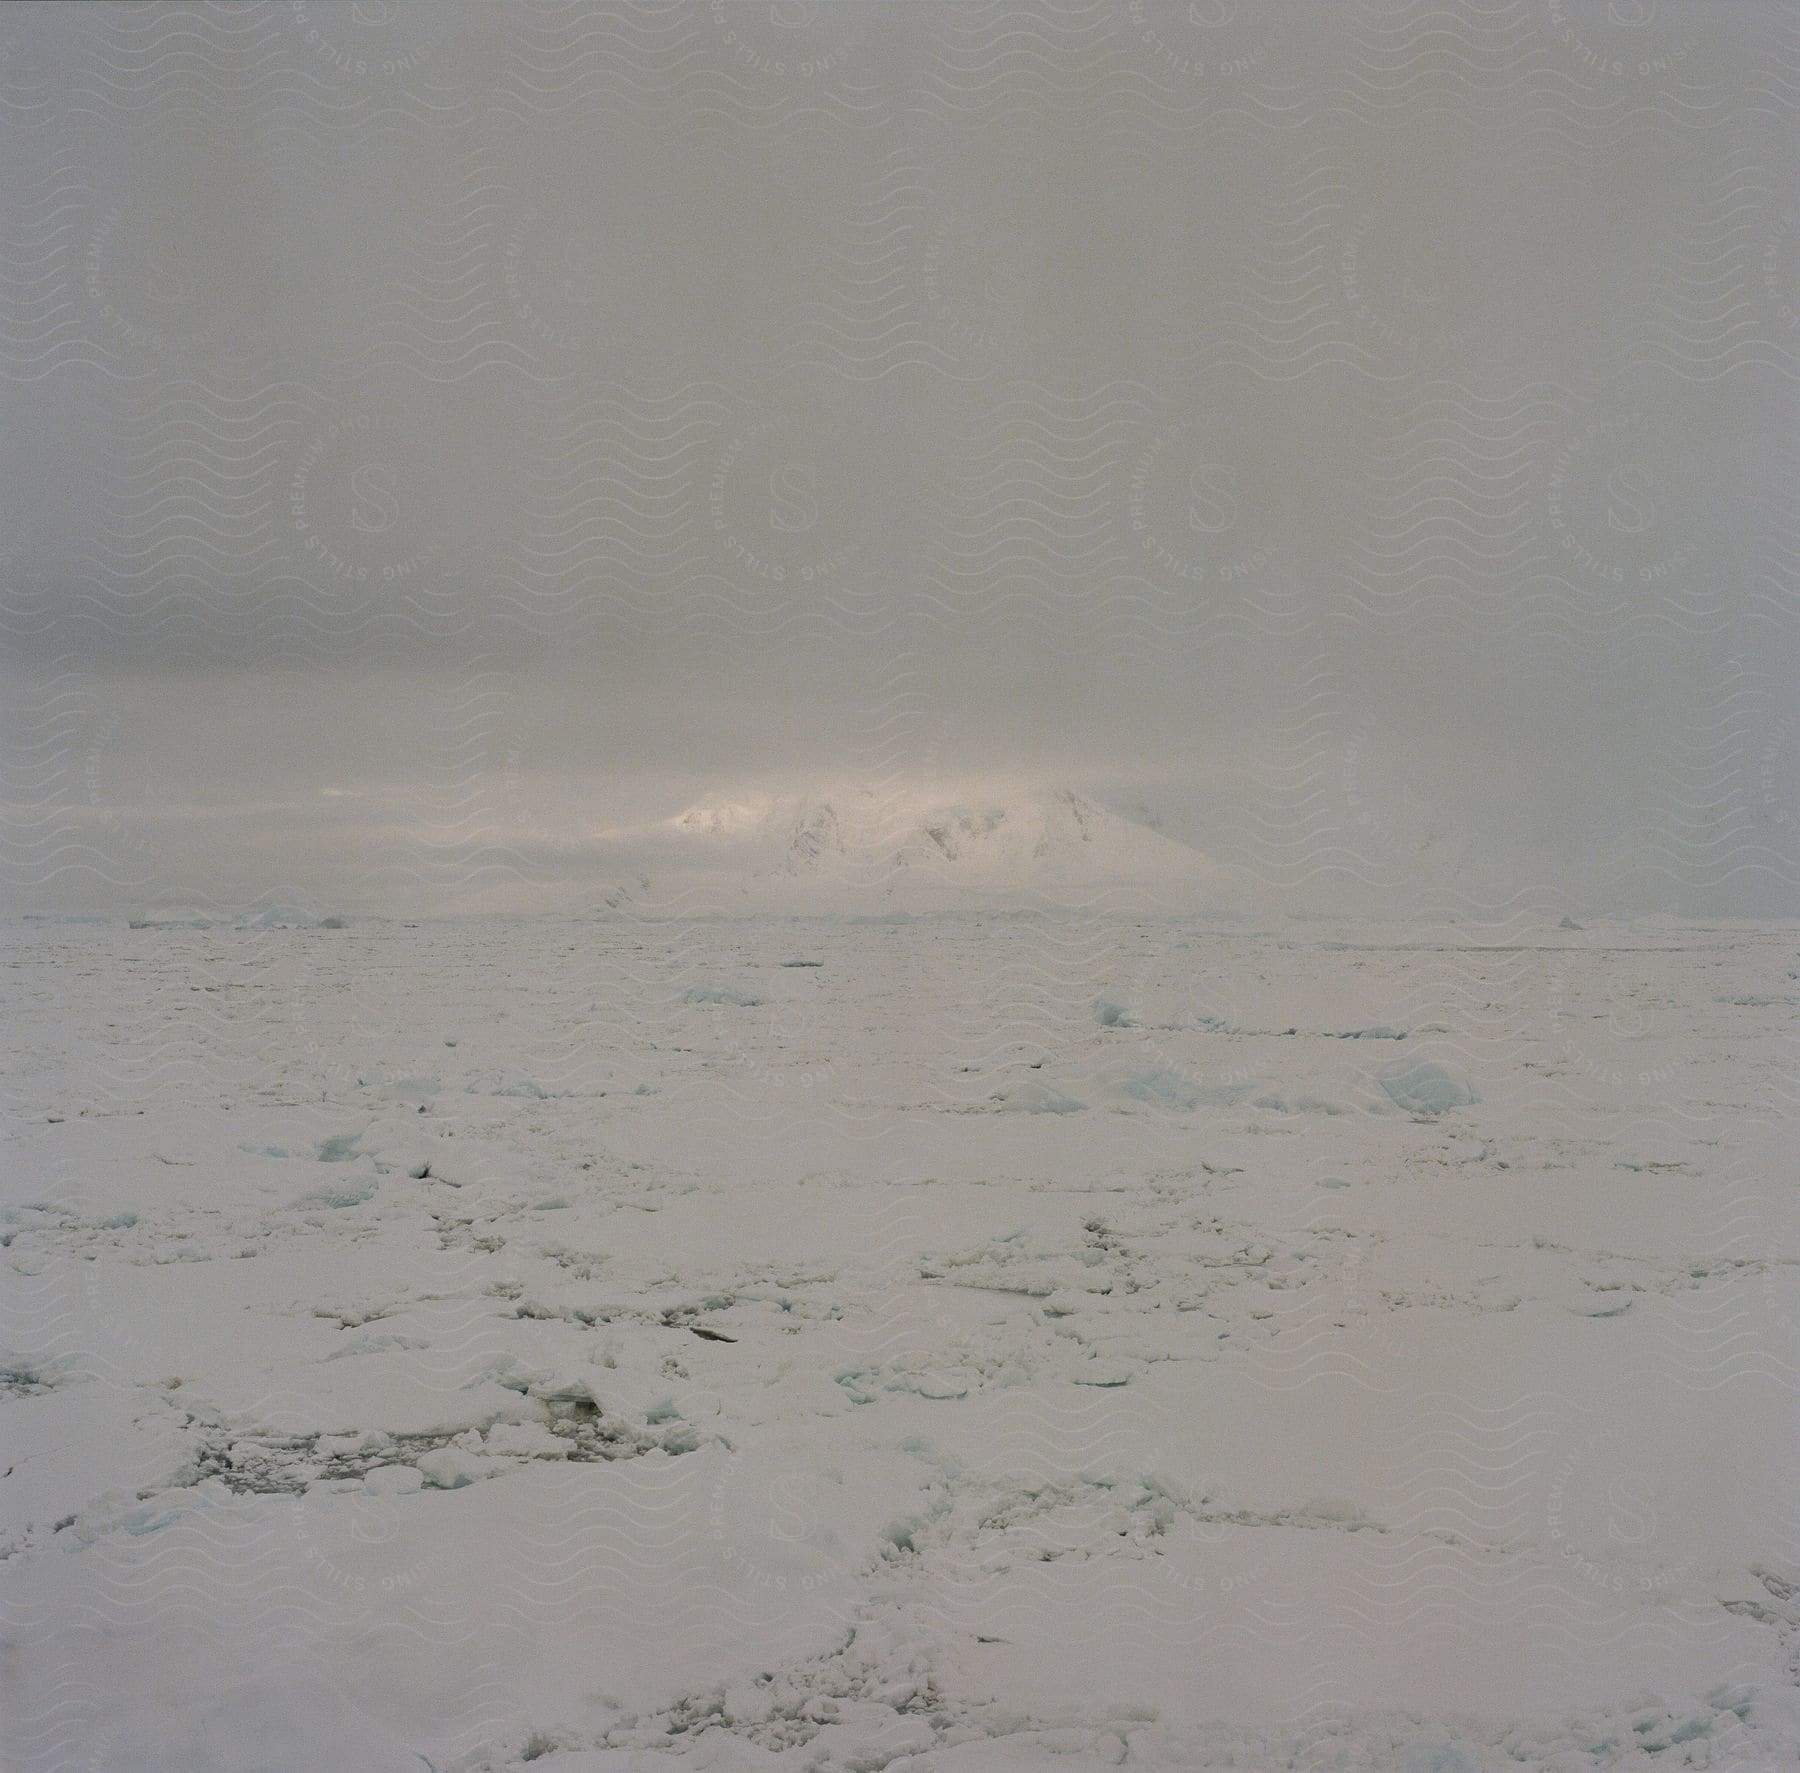 Ice cap stretches across vast landscape with distant mountain on frozen horizon